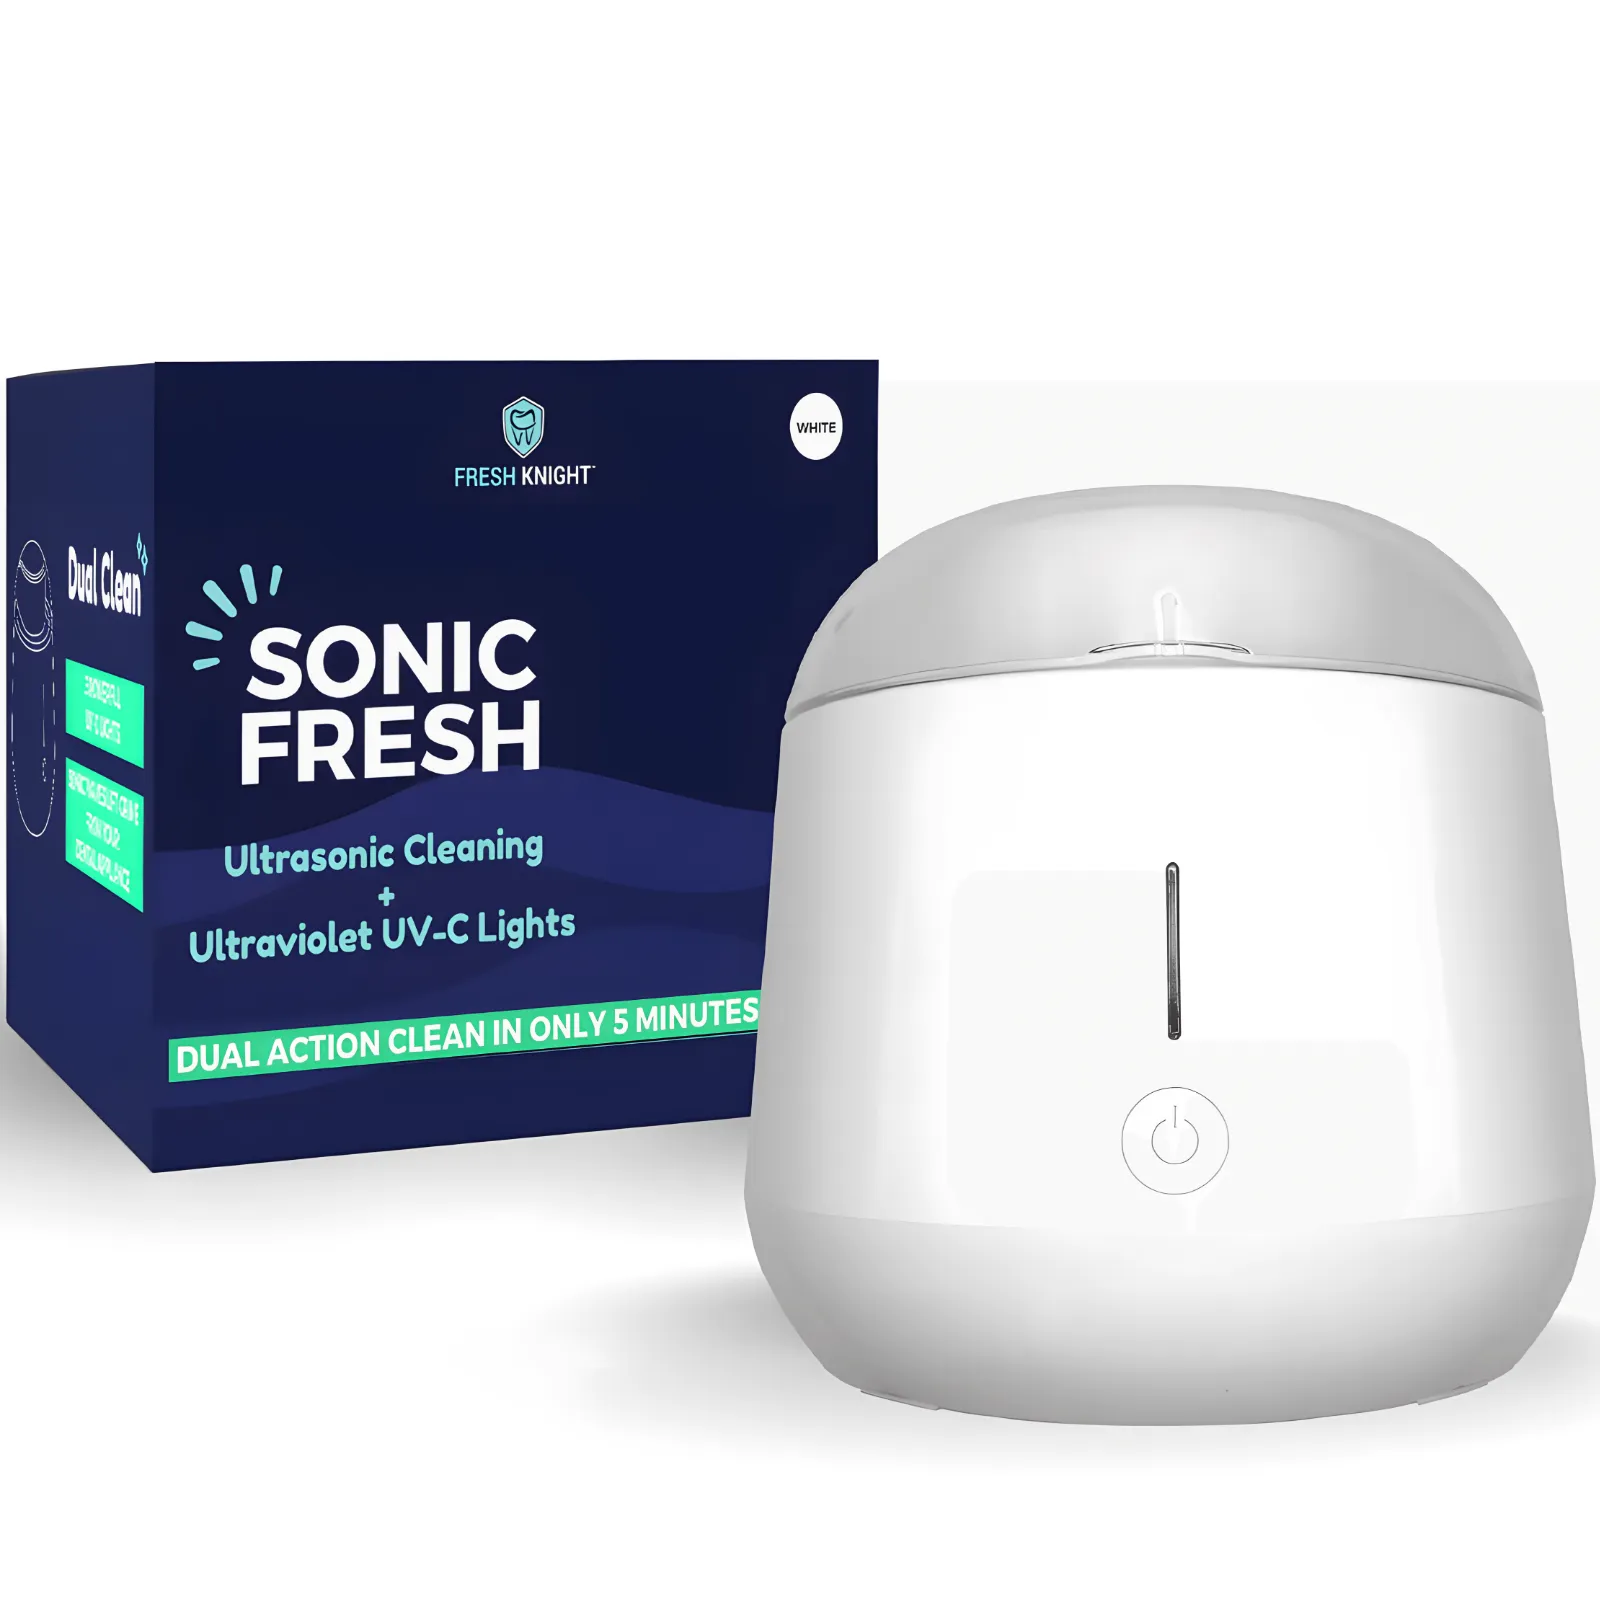 Free Fresh Knight Sonic Fresh Ultrasonic UV Cleaner